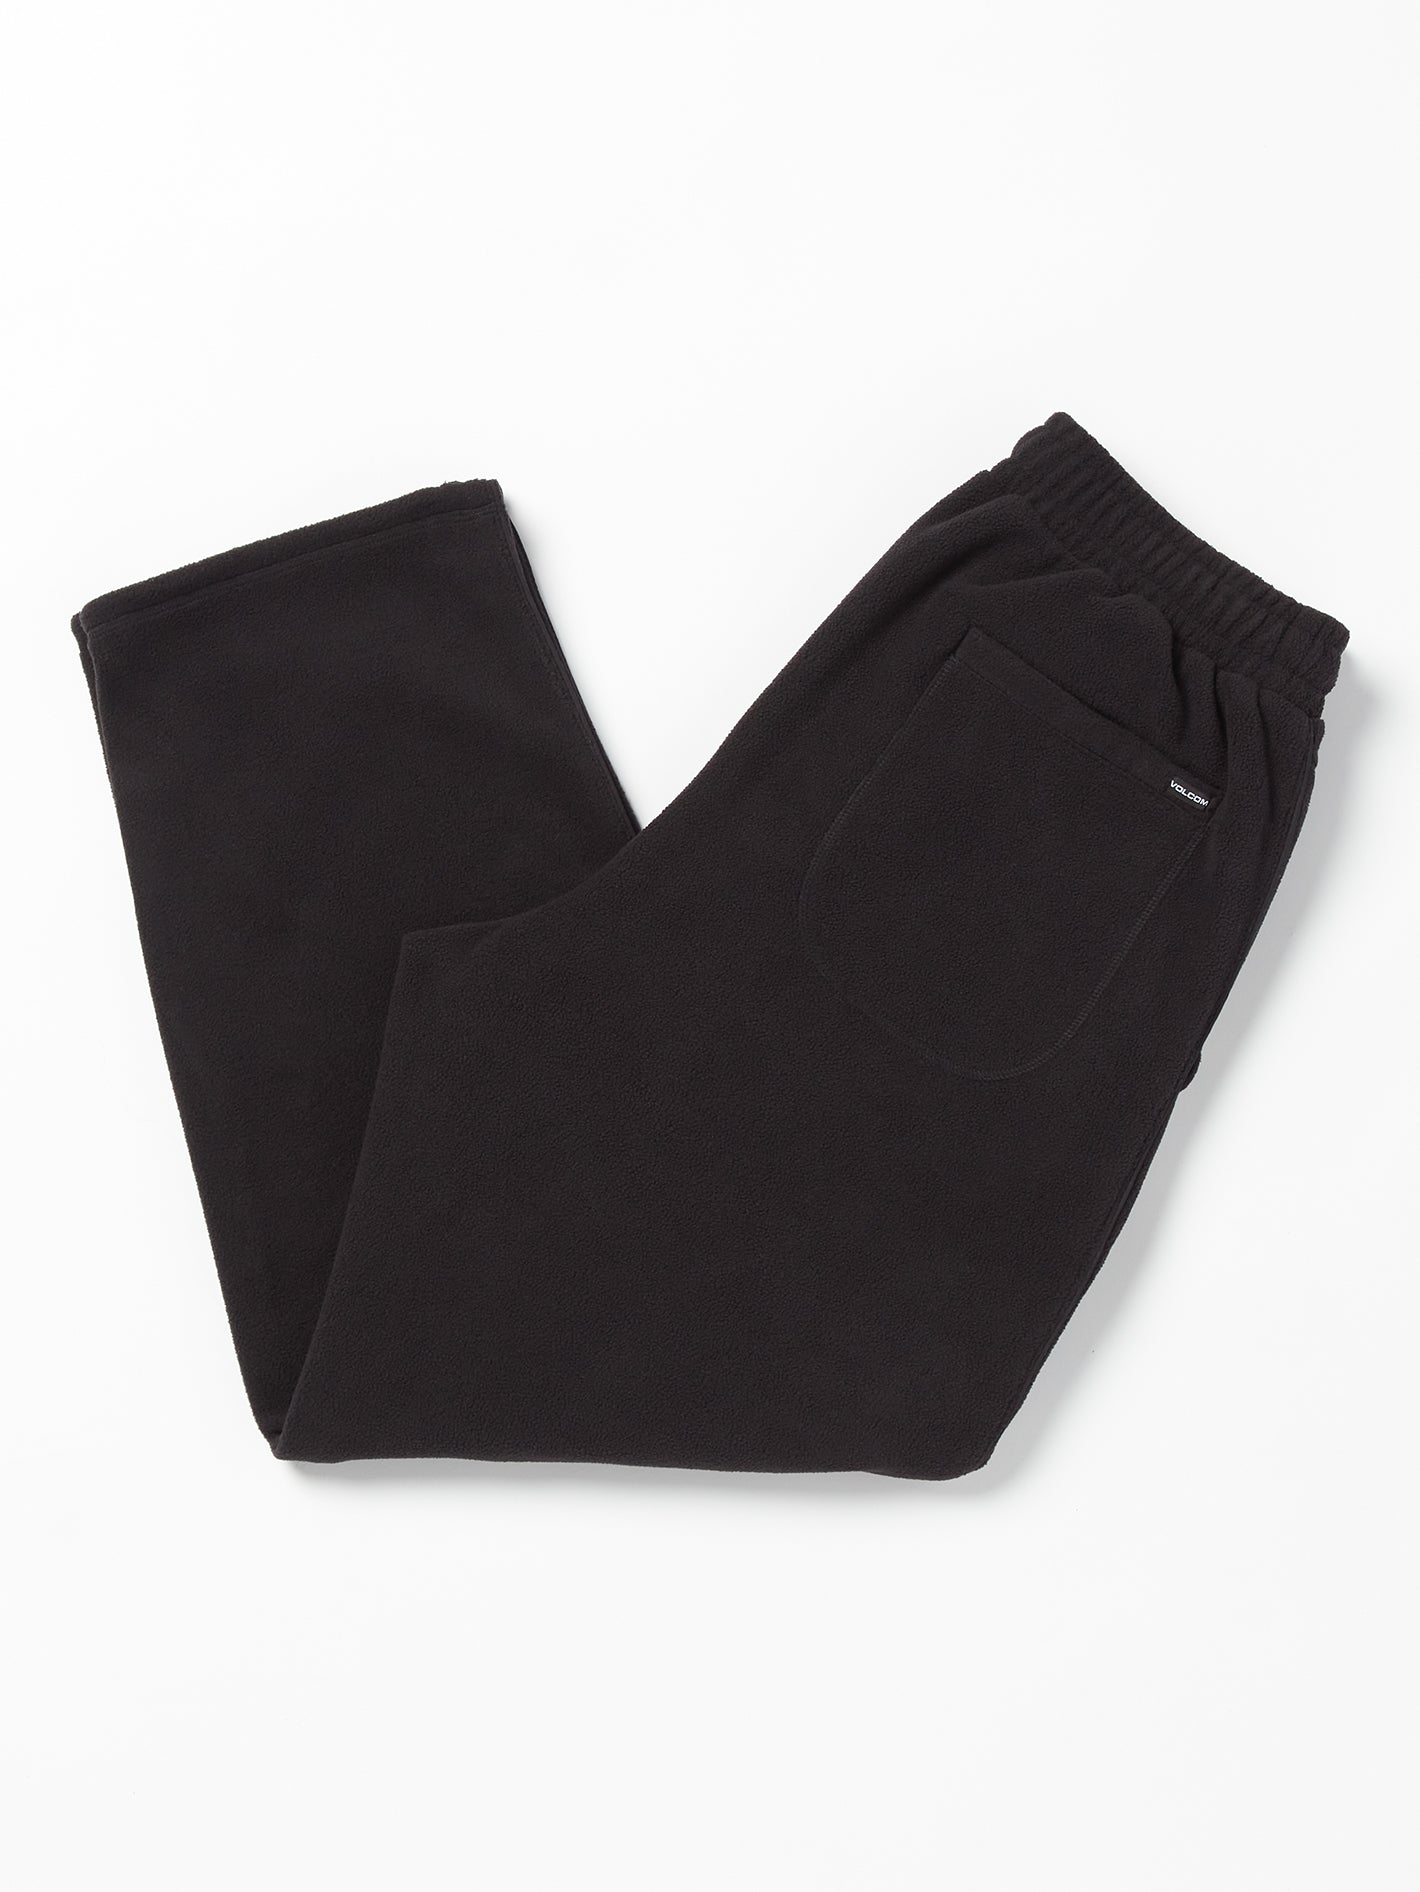 Mens Tech Fleece Pants - Black – Volcom US